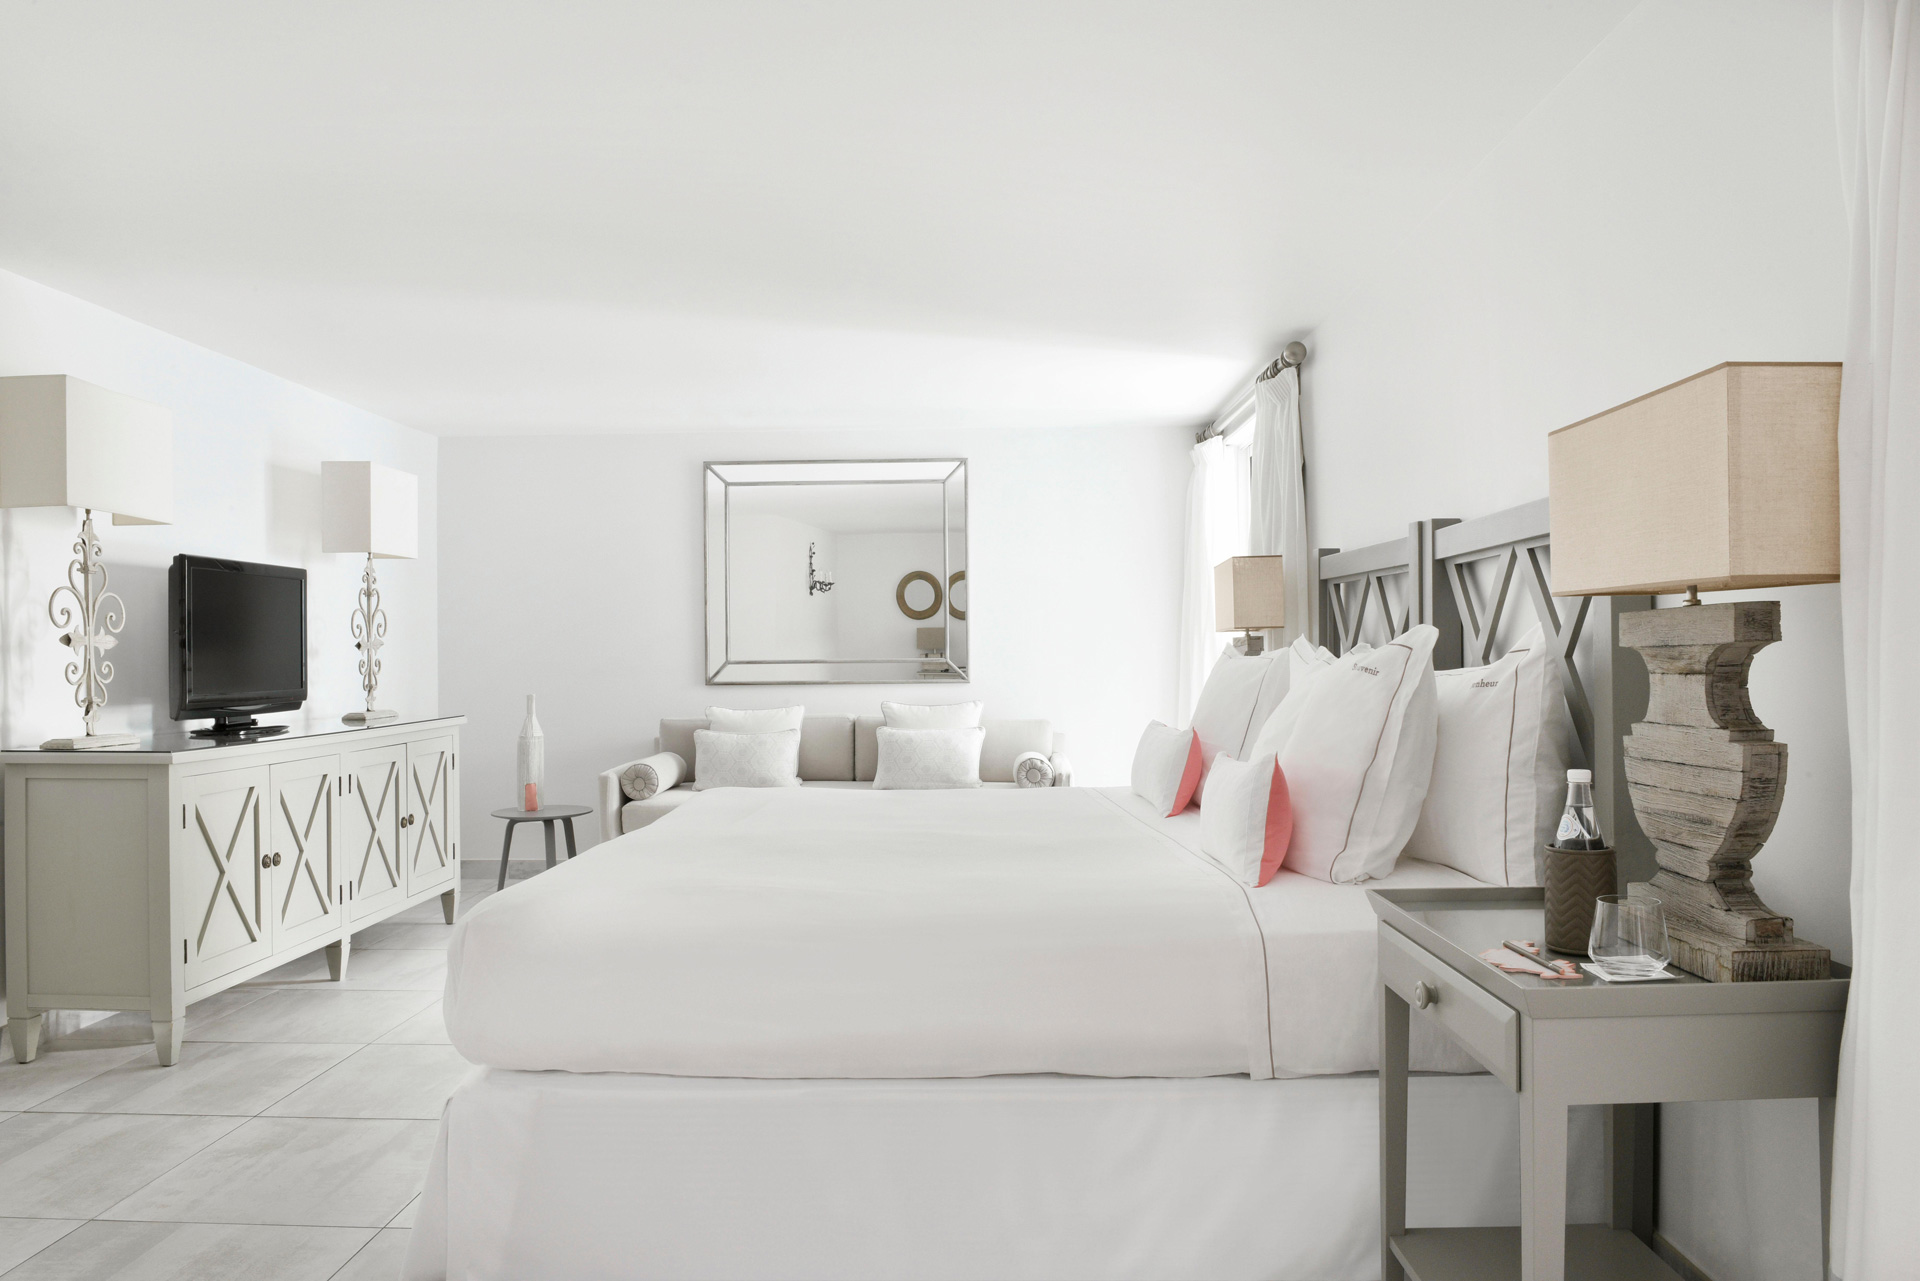 2 Bedroom Beach Suite, Cheval Blanc St-Barth Luxury Hotel, Caribbean, Casol